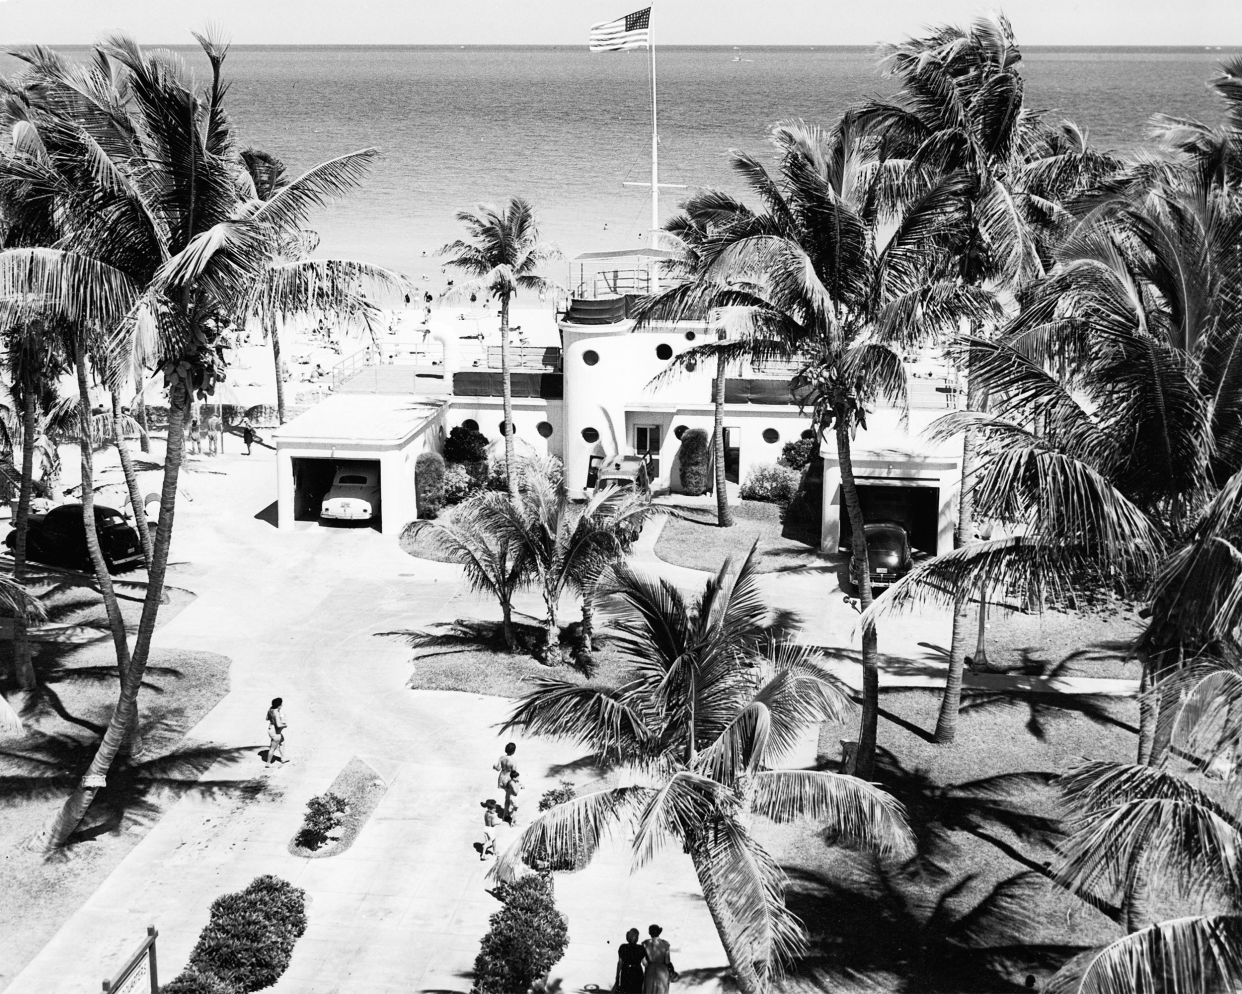 An Art Deco parks department building stands next to a public beach, Miami Beach, Florida, late 1940s.